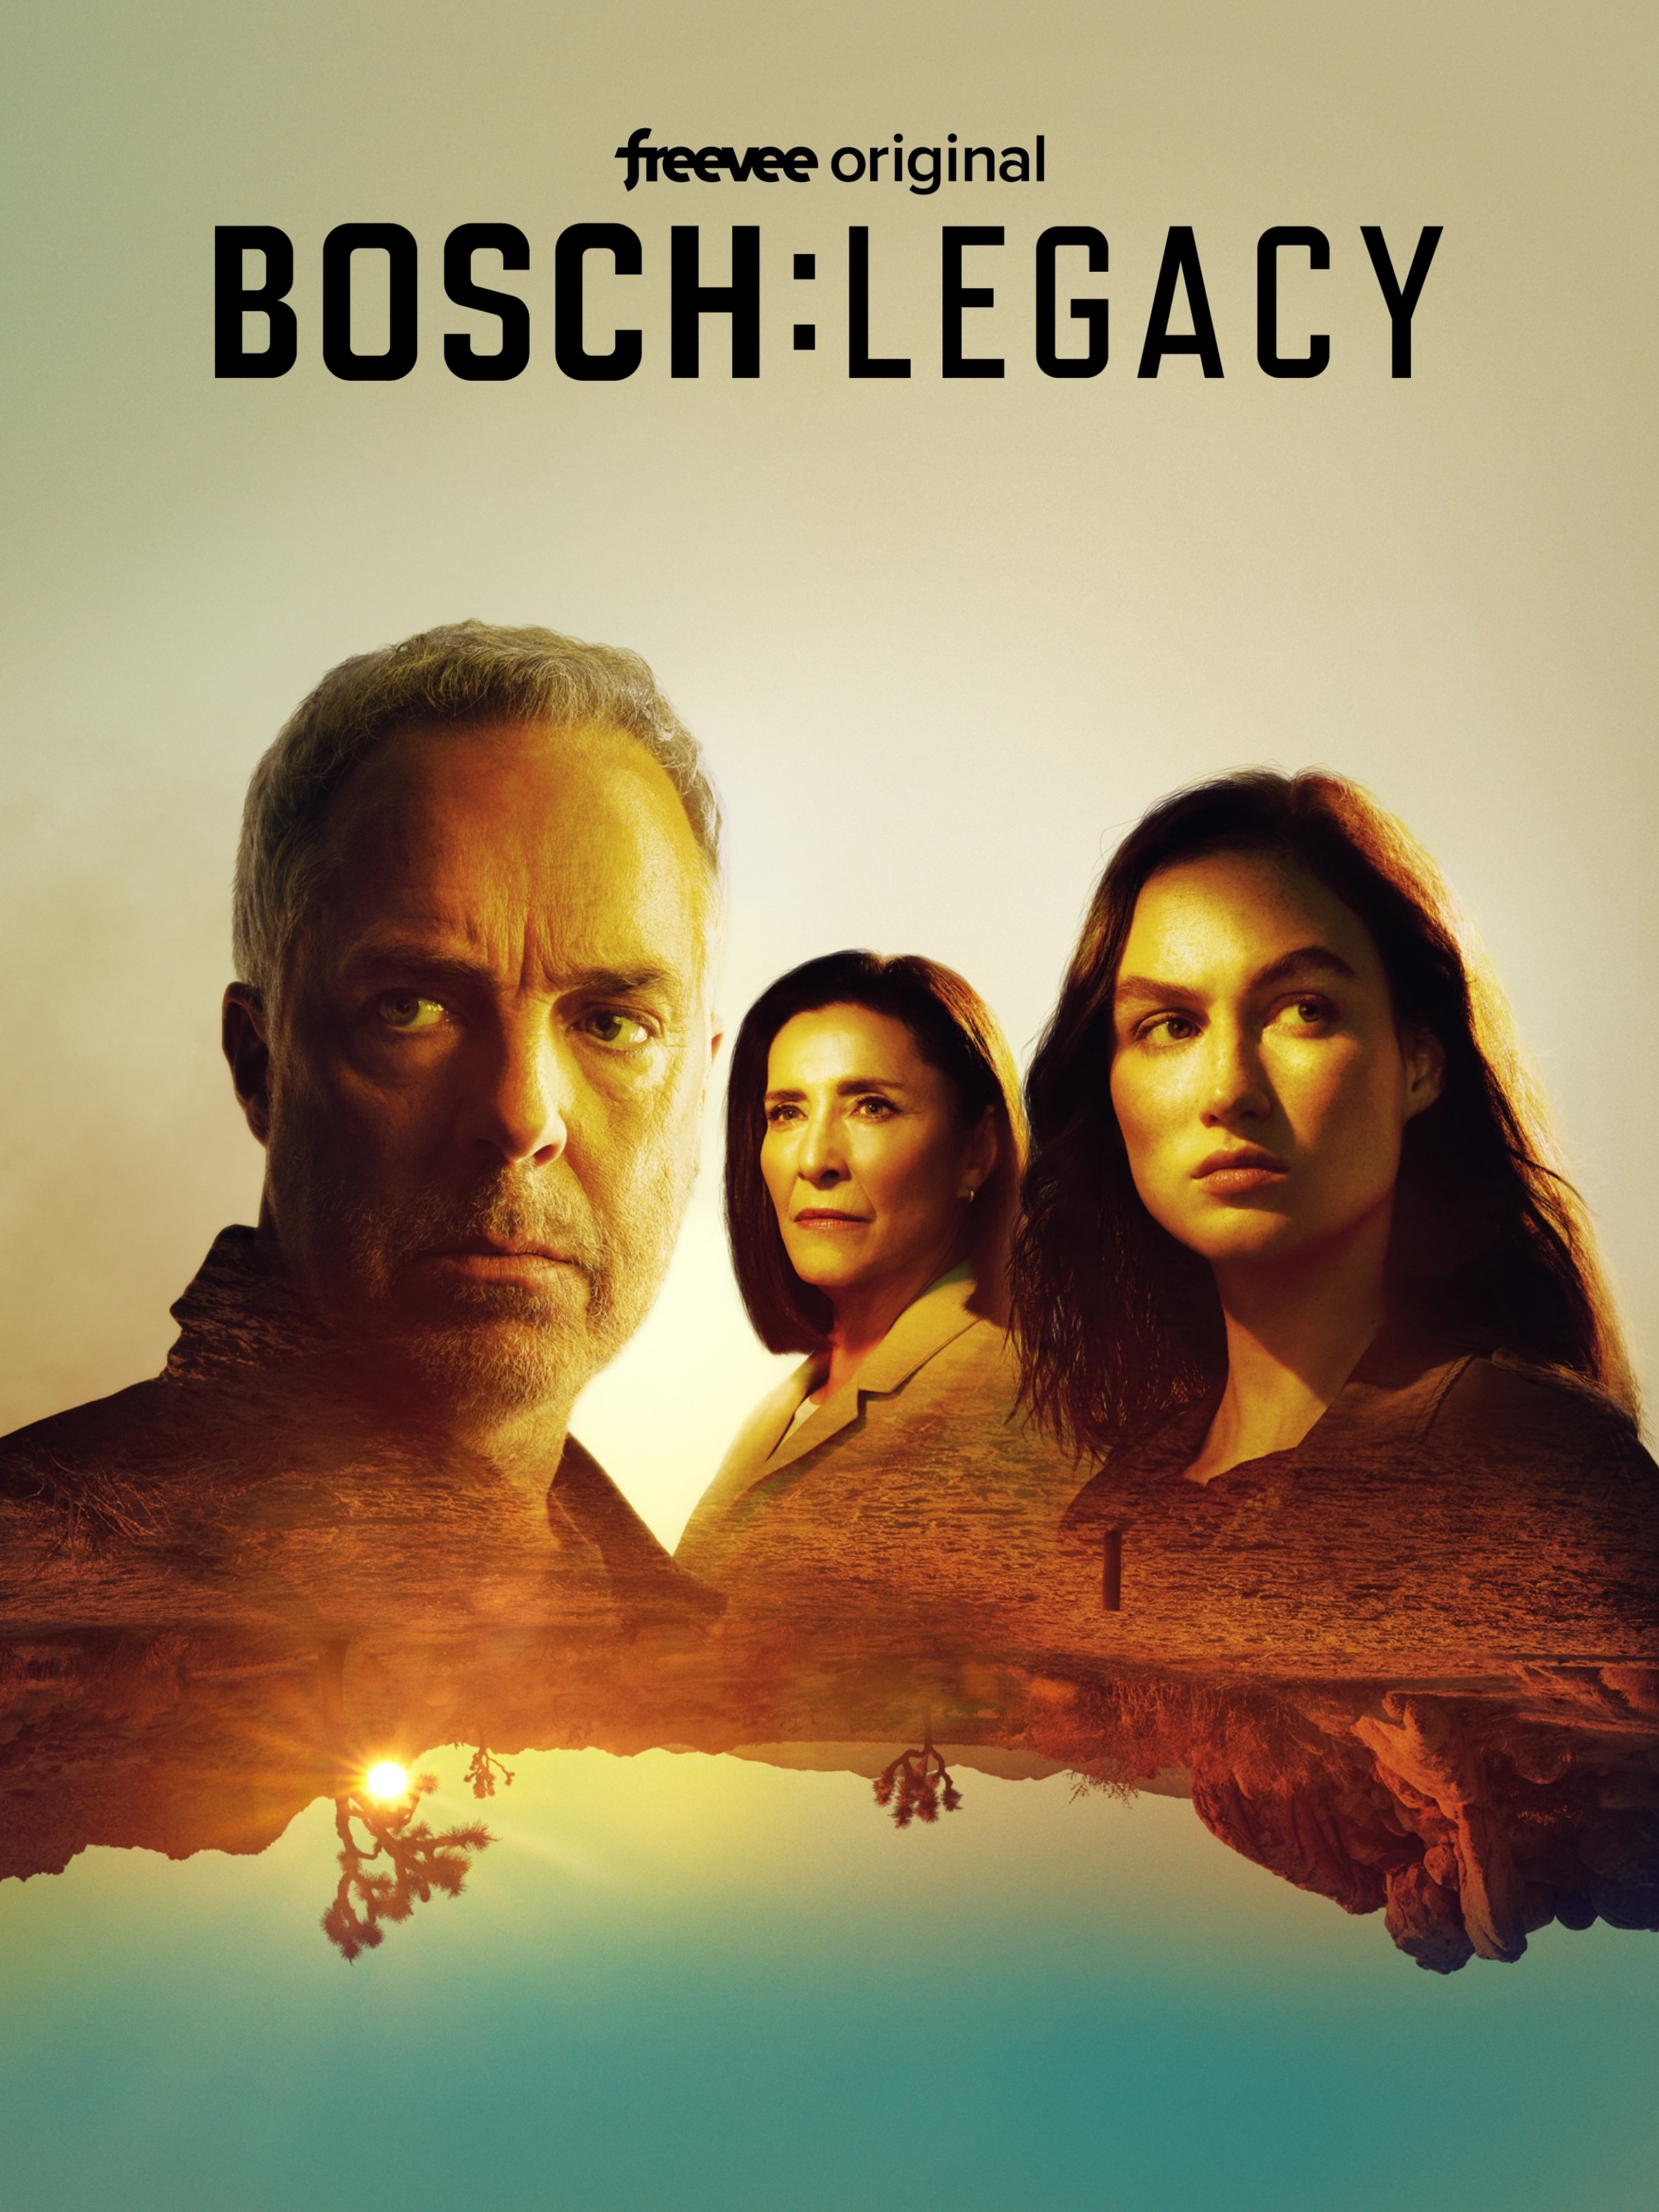 Bosch: Legacy Season 2